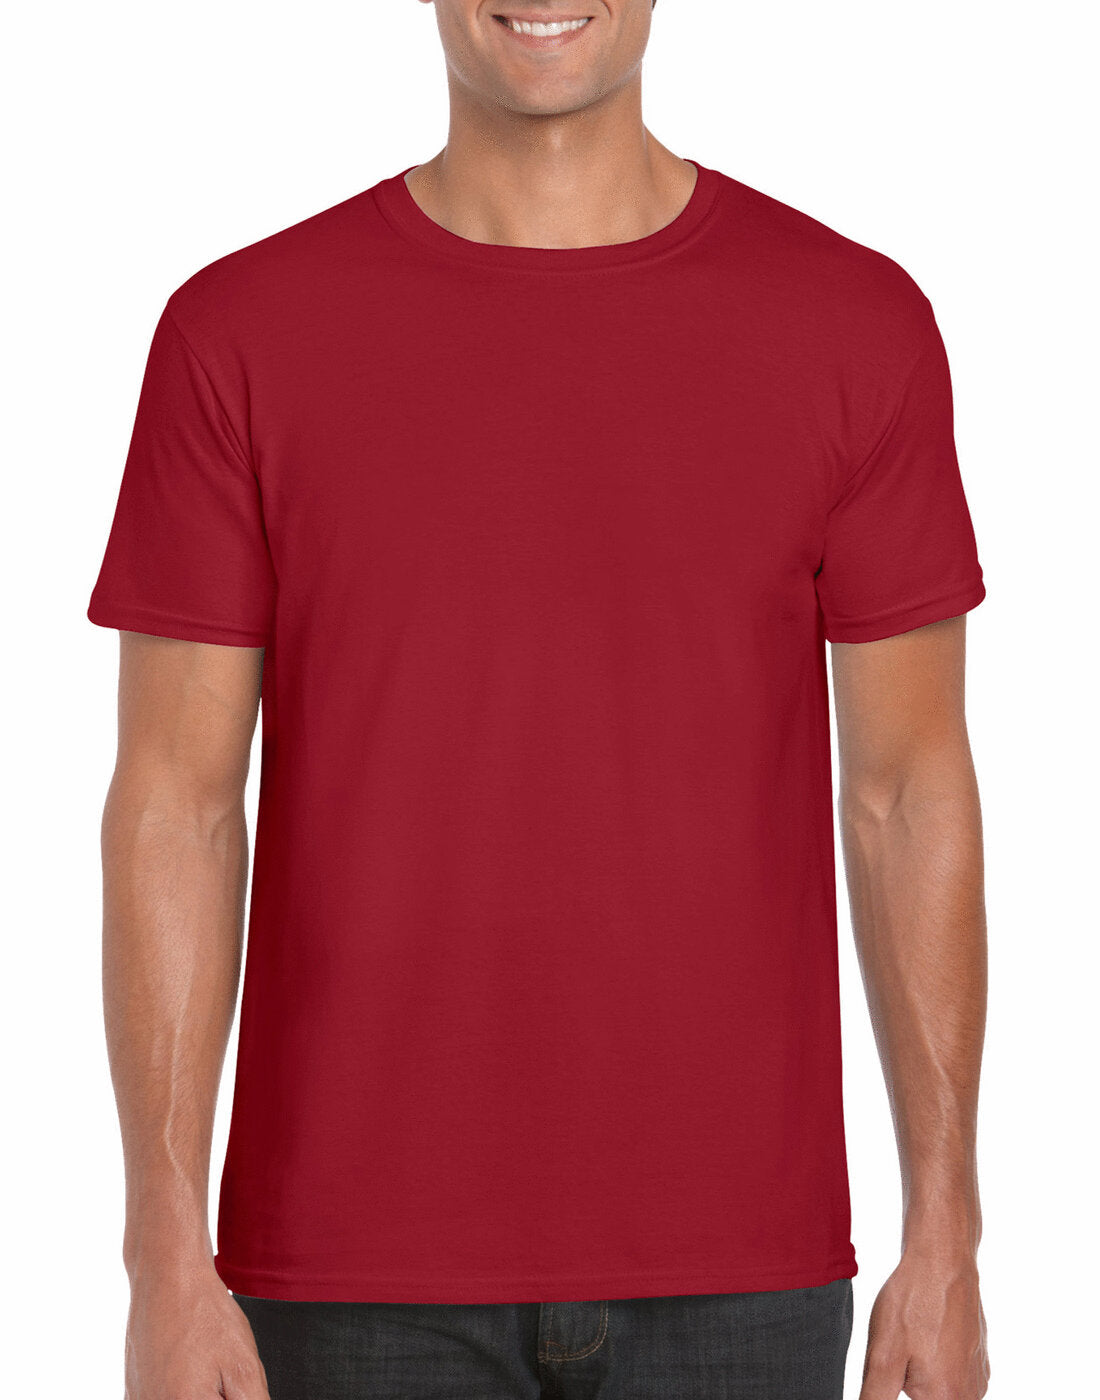 Gildan Adult Softstyle Ringspun T-Shirt - GD01 - Cherry Red